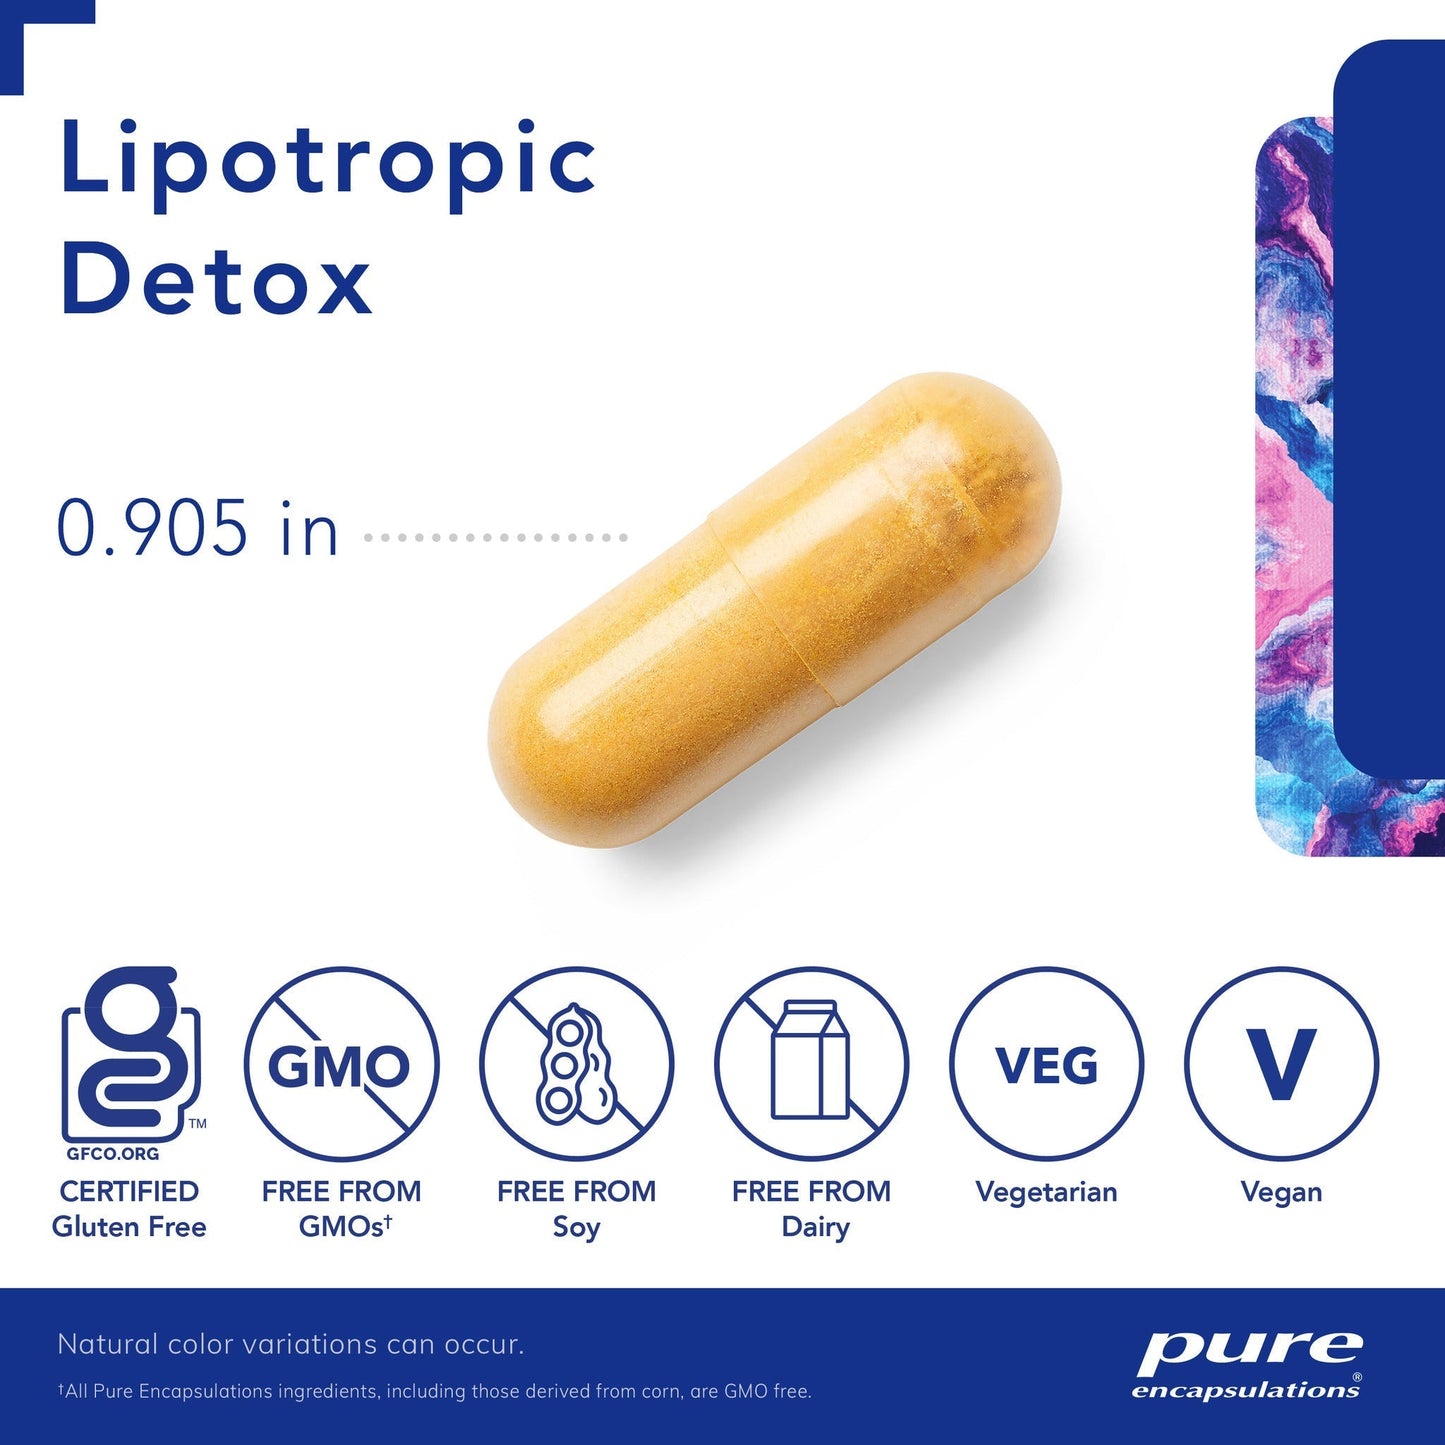 Lipotropic Detox